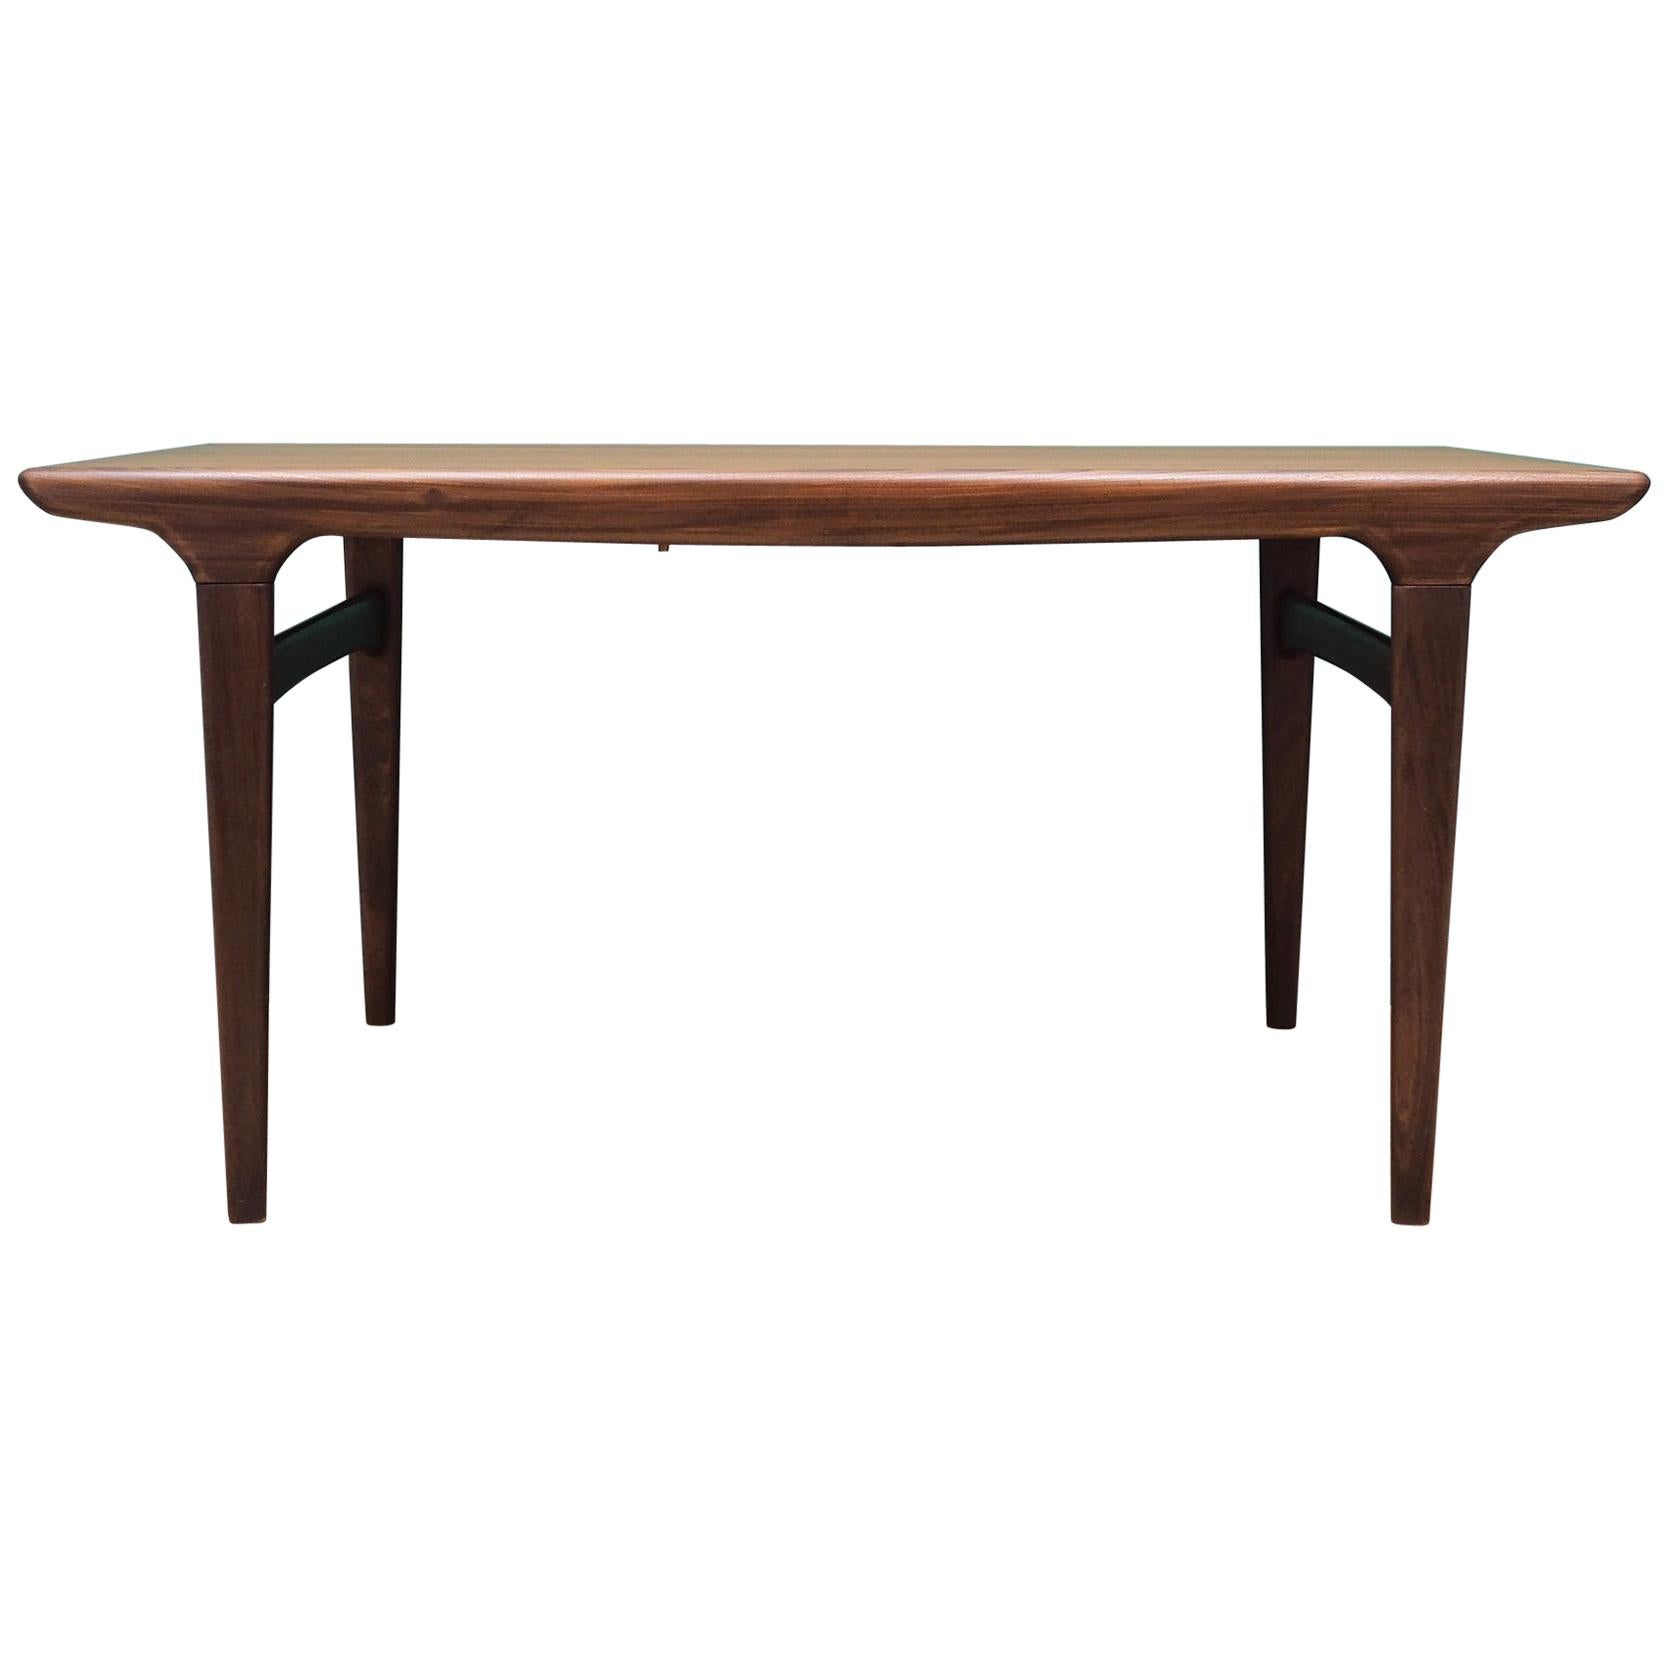 Table Teak, Danish Design, 1970s, Designer Johannes Andersen, Producer Uldum For Sale